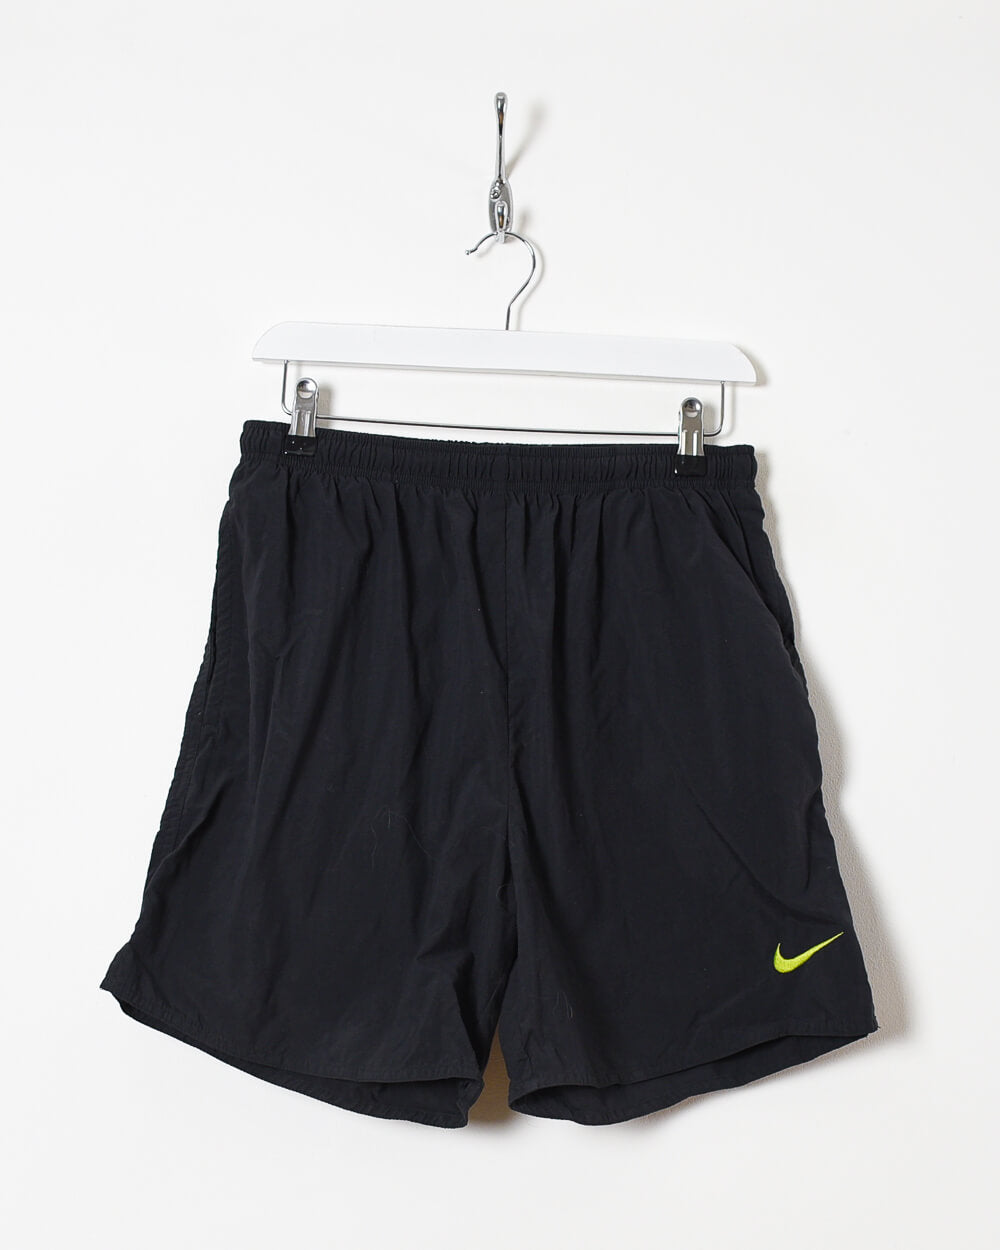 Black Nike Swimwear Shorts - W28